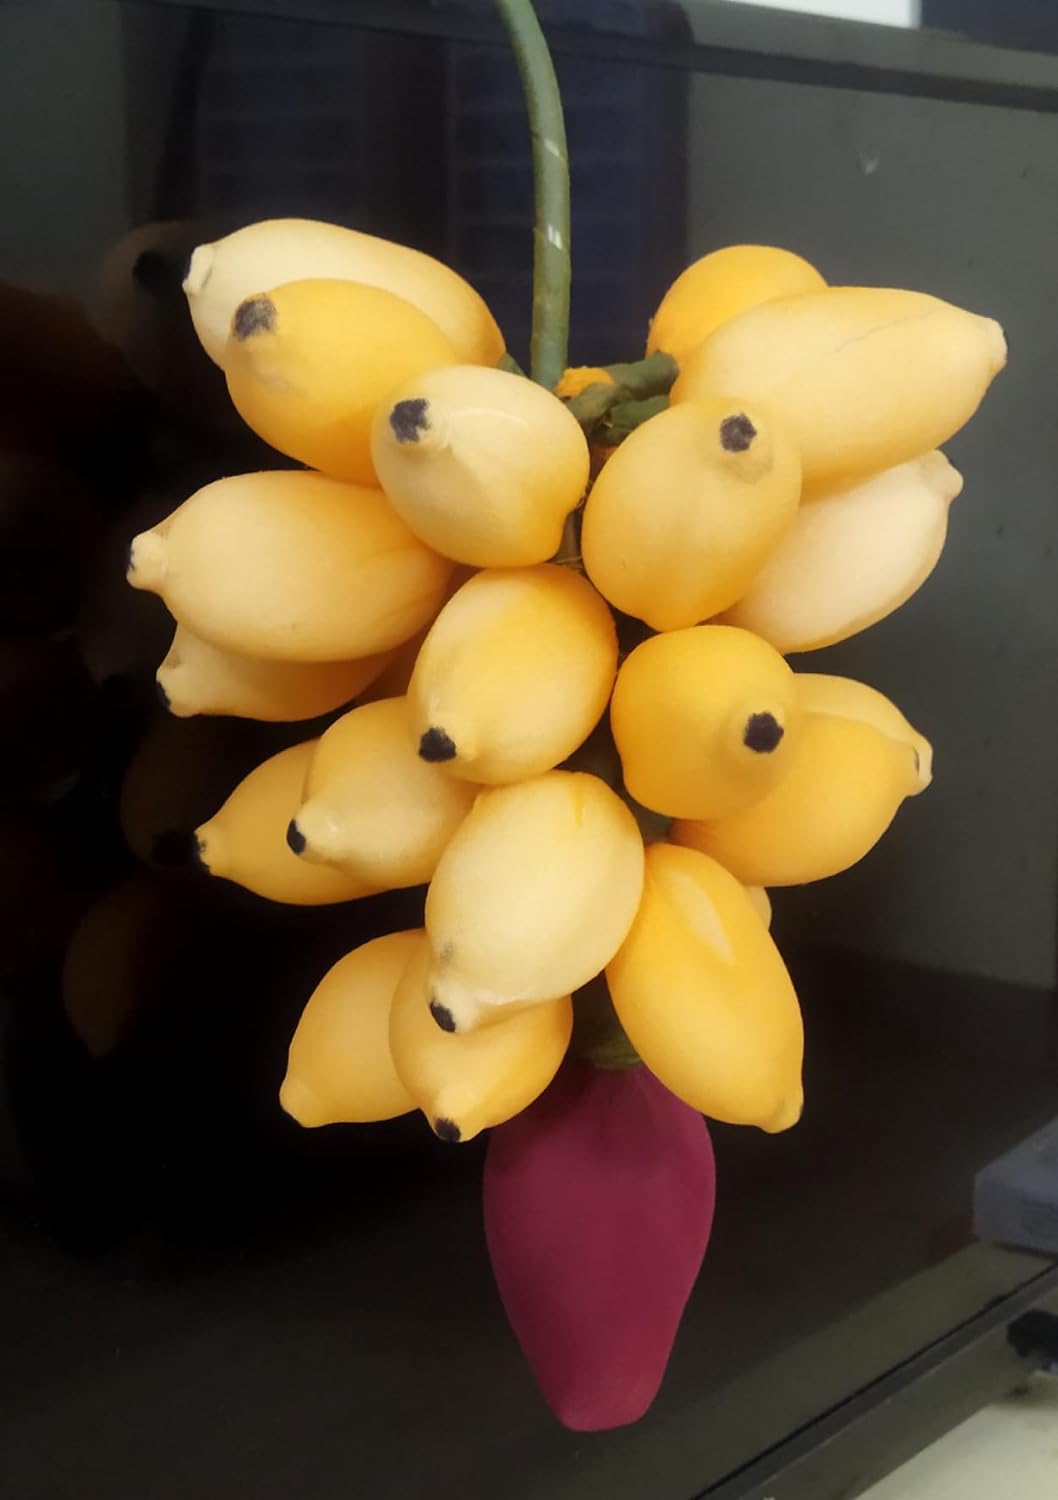 ZENRISE Artificial Banana Hanging Handicraft Festival Decoration (Yellow, 2 Pieces)